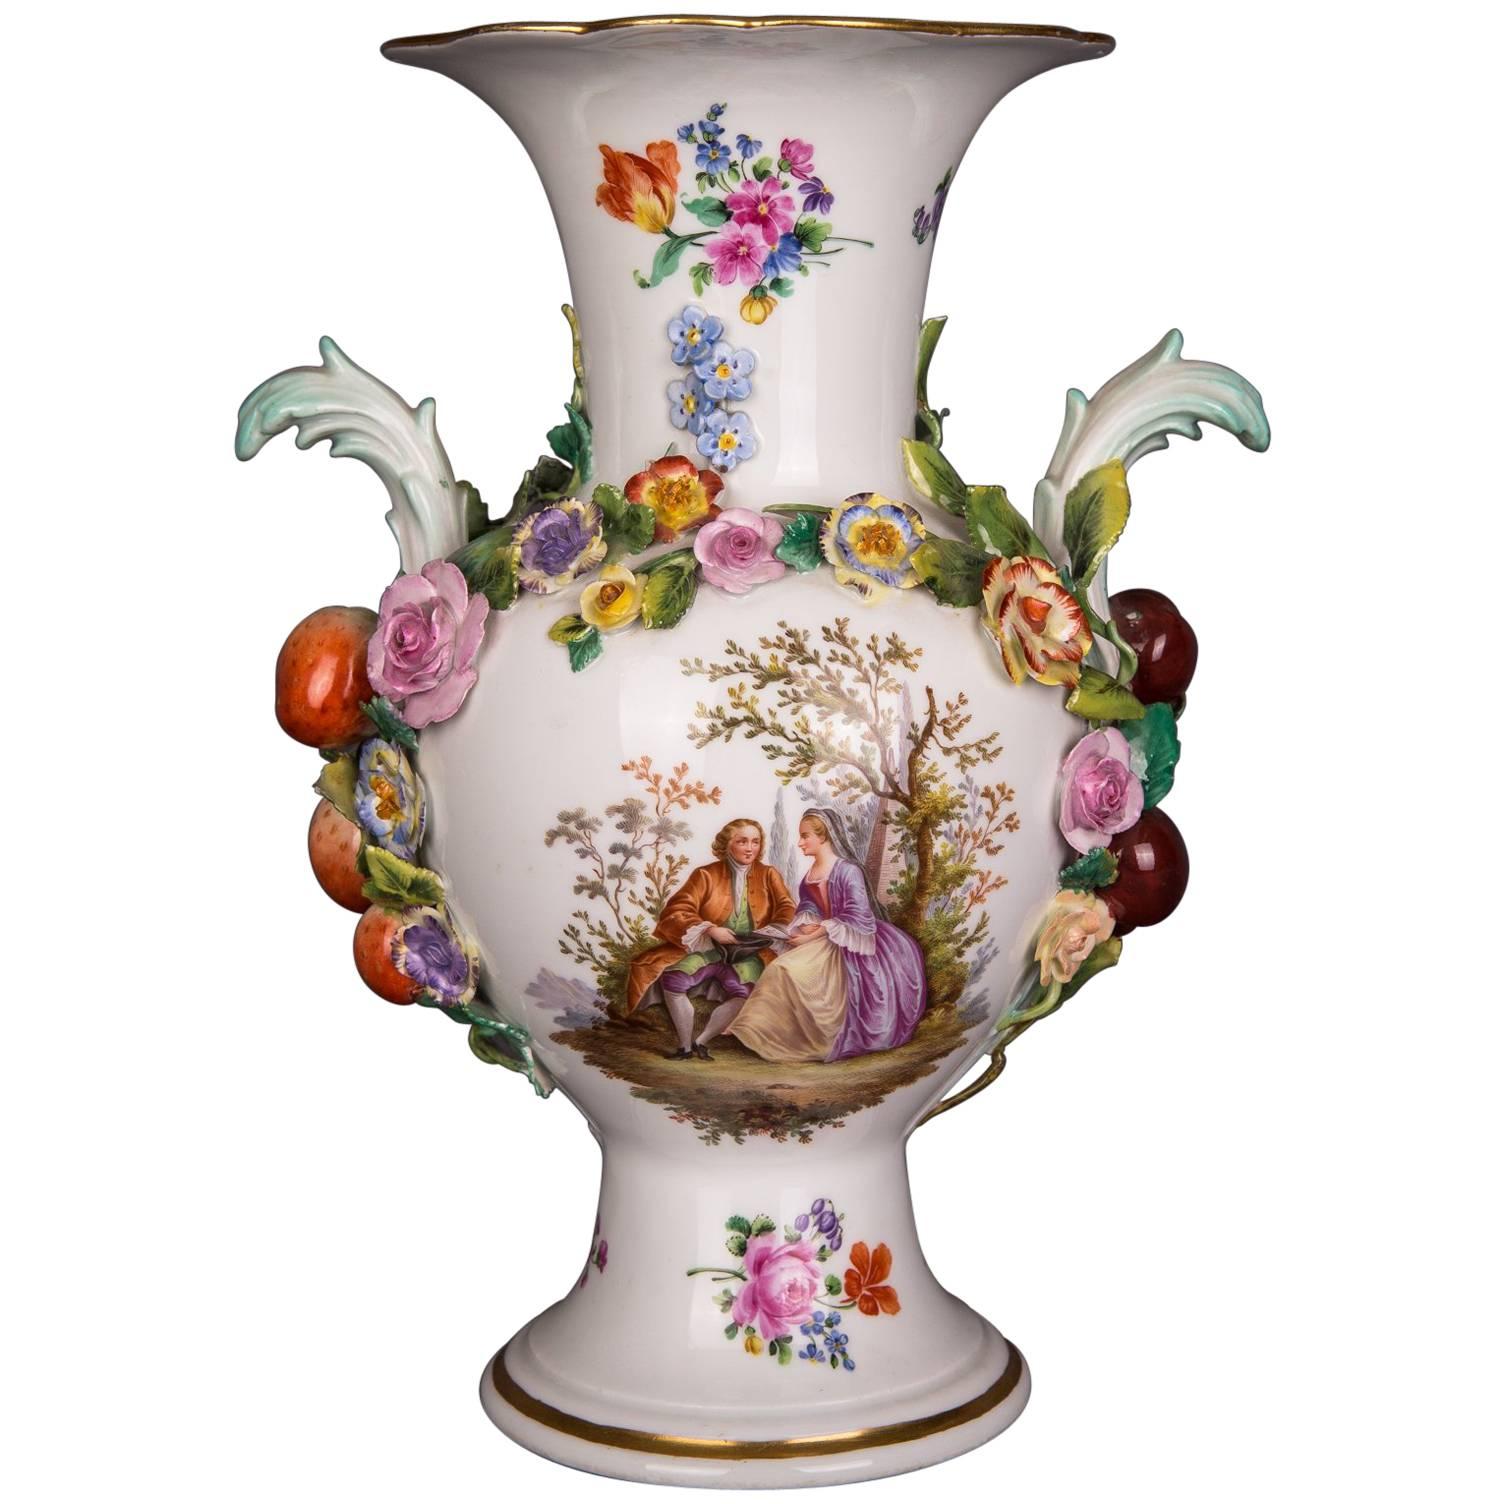 Big Meissen Porcelain Vase Watteau Scene with Fruits and Flowers Paintings